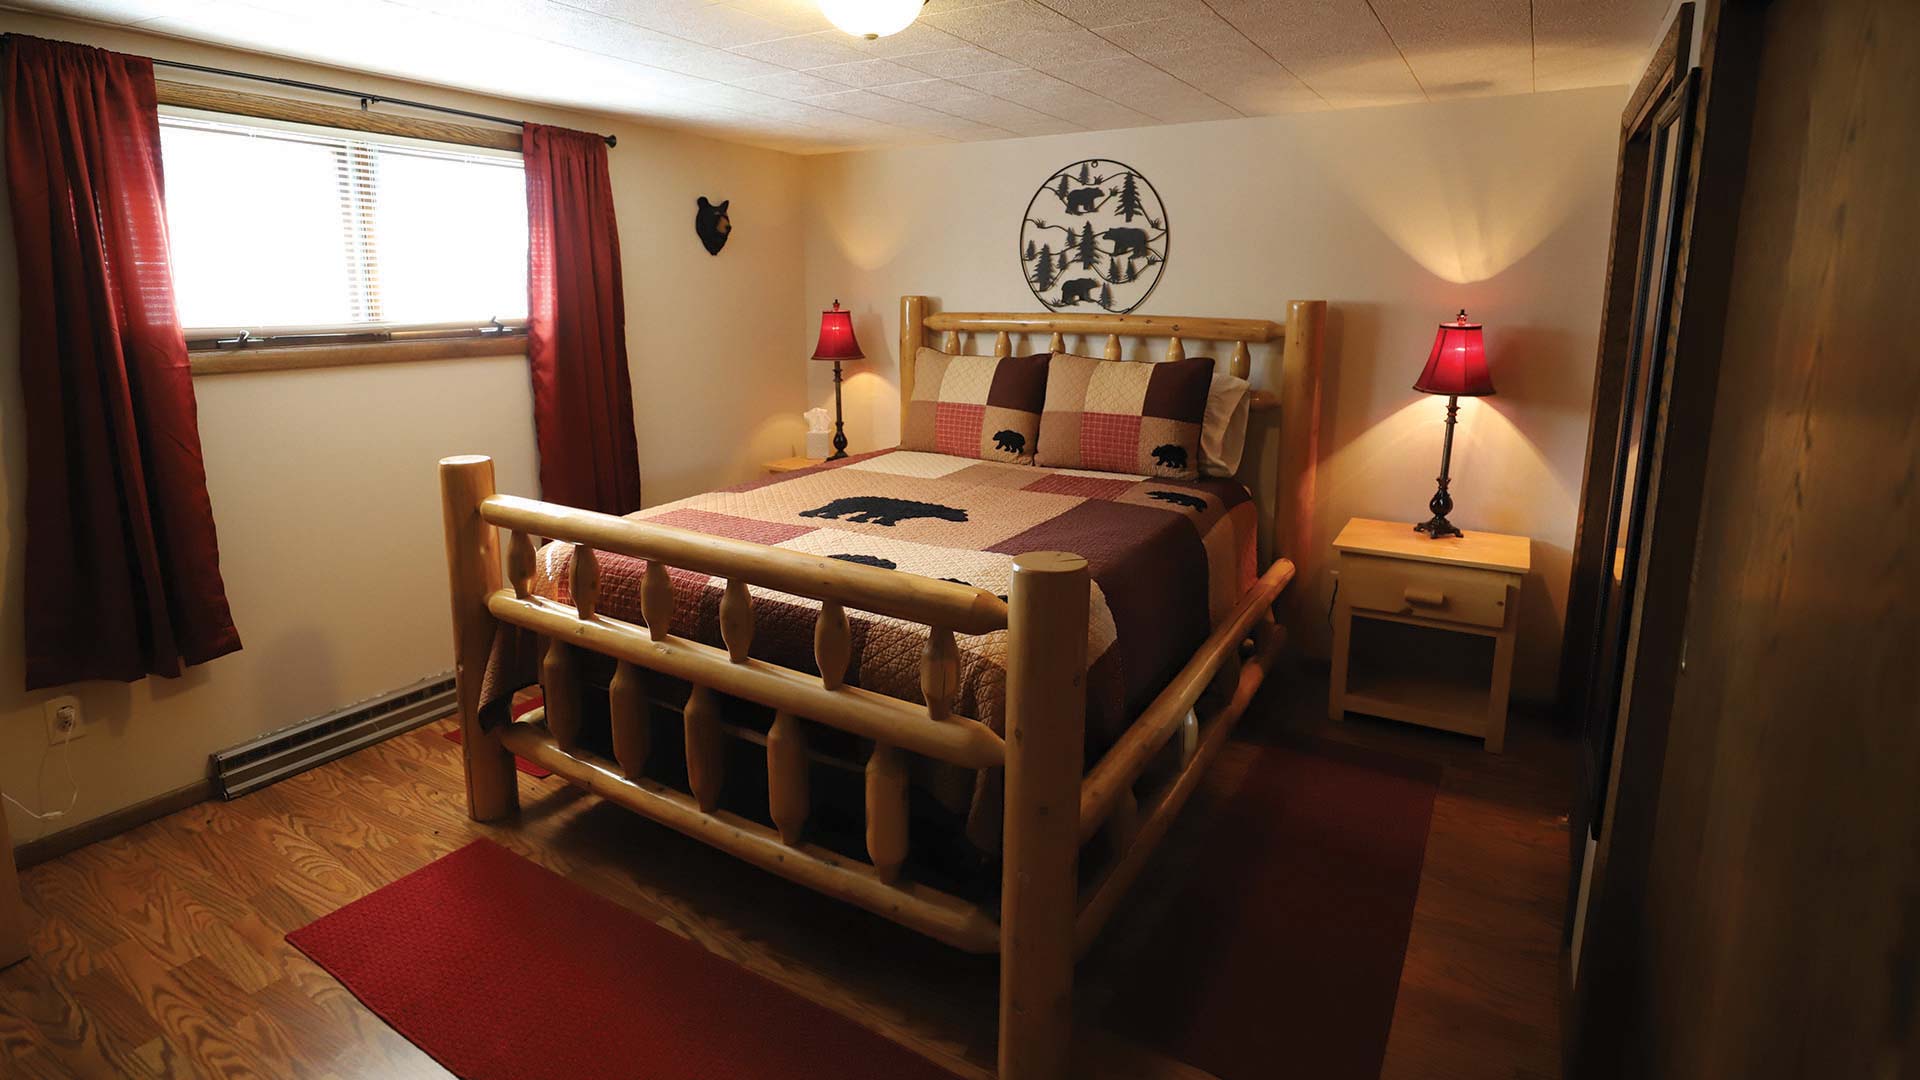 Cabin themed bedroom at Lake Tomahawk Lodge